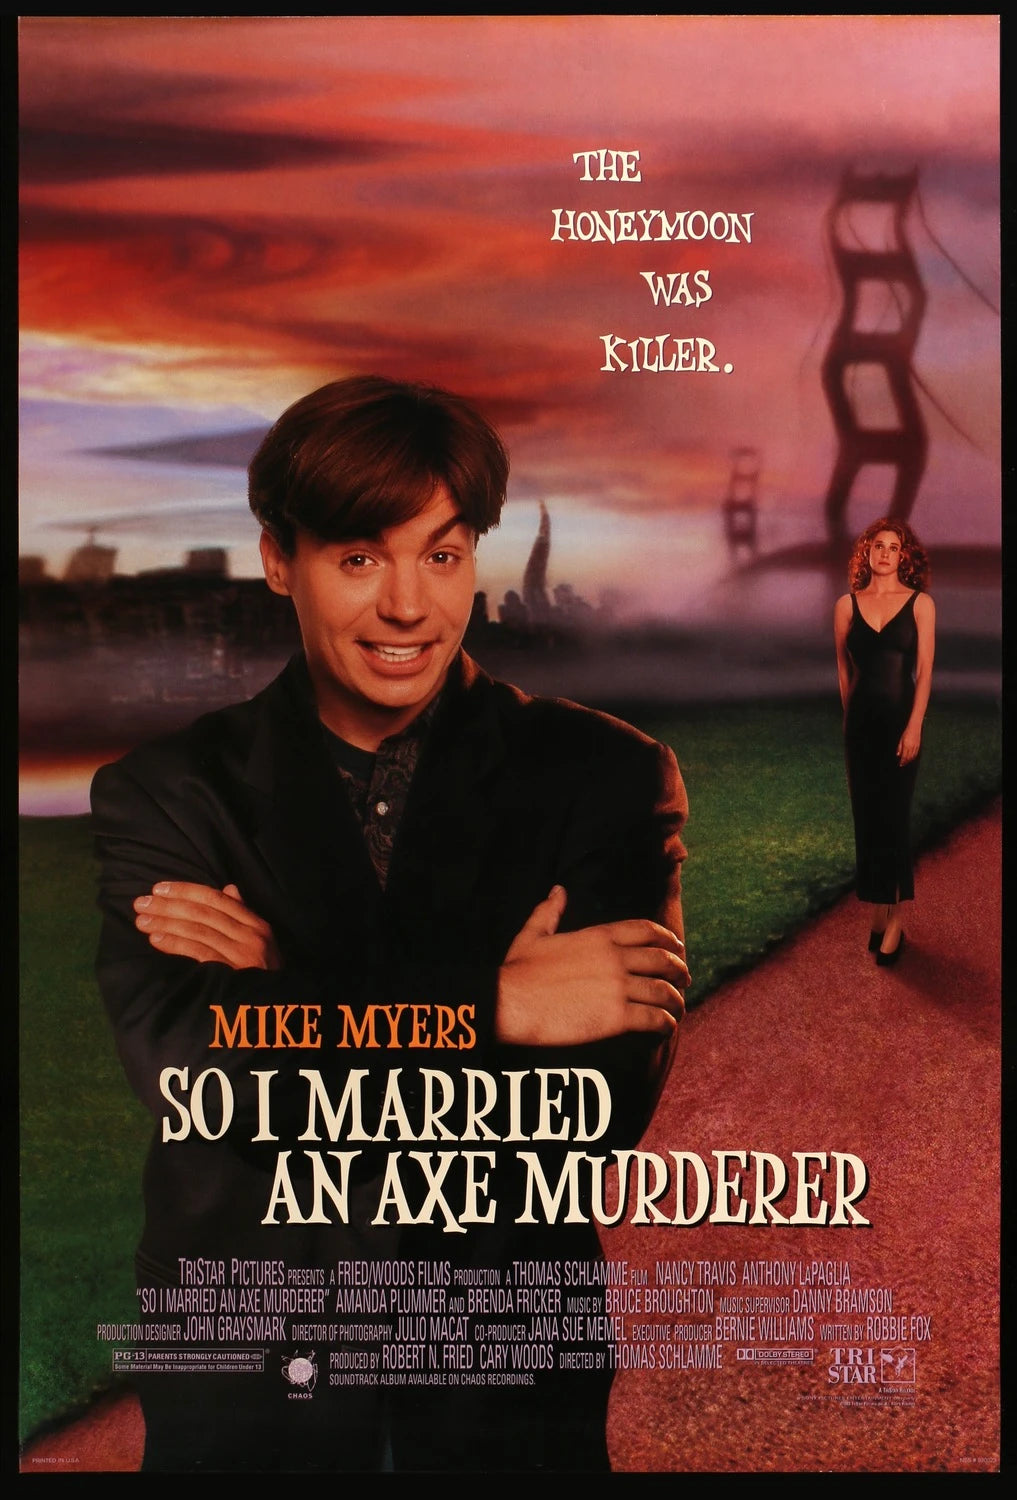 So I Married an Axe Murderer (1993) original movie poster for sale at Original Film Art